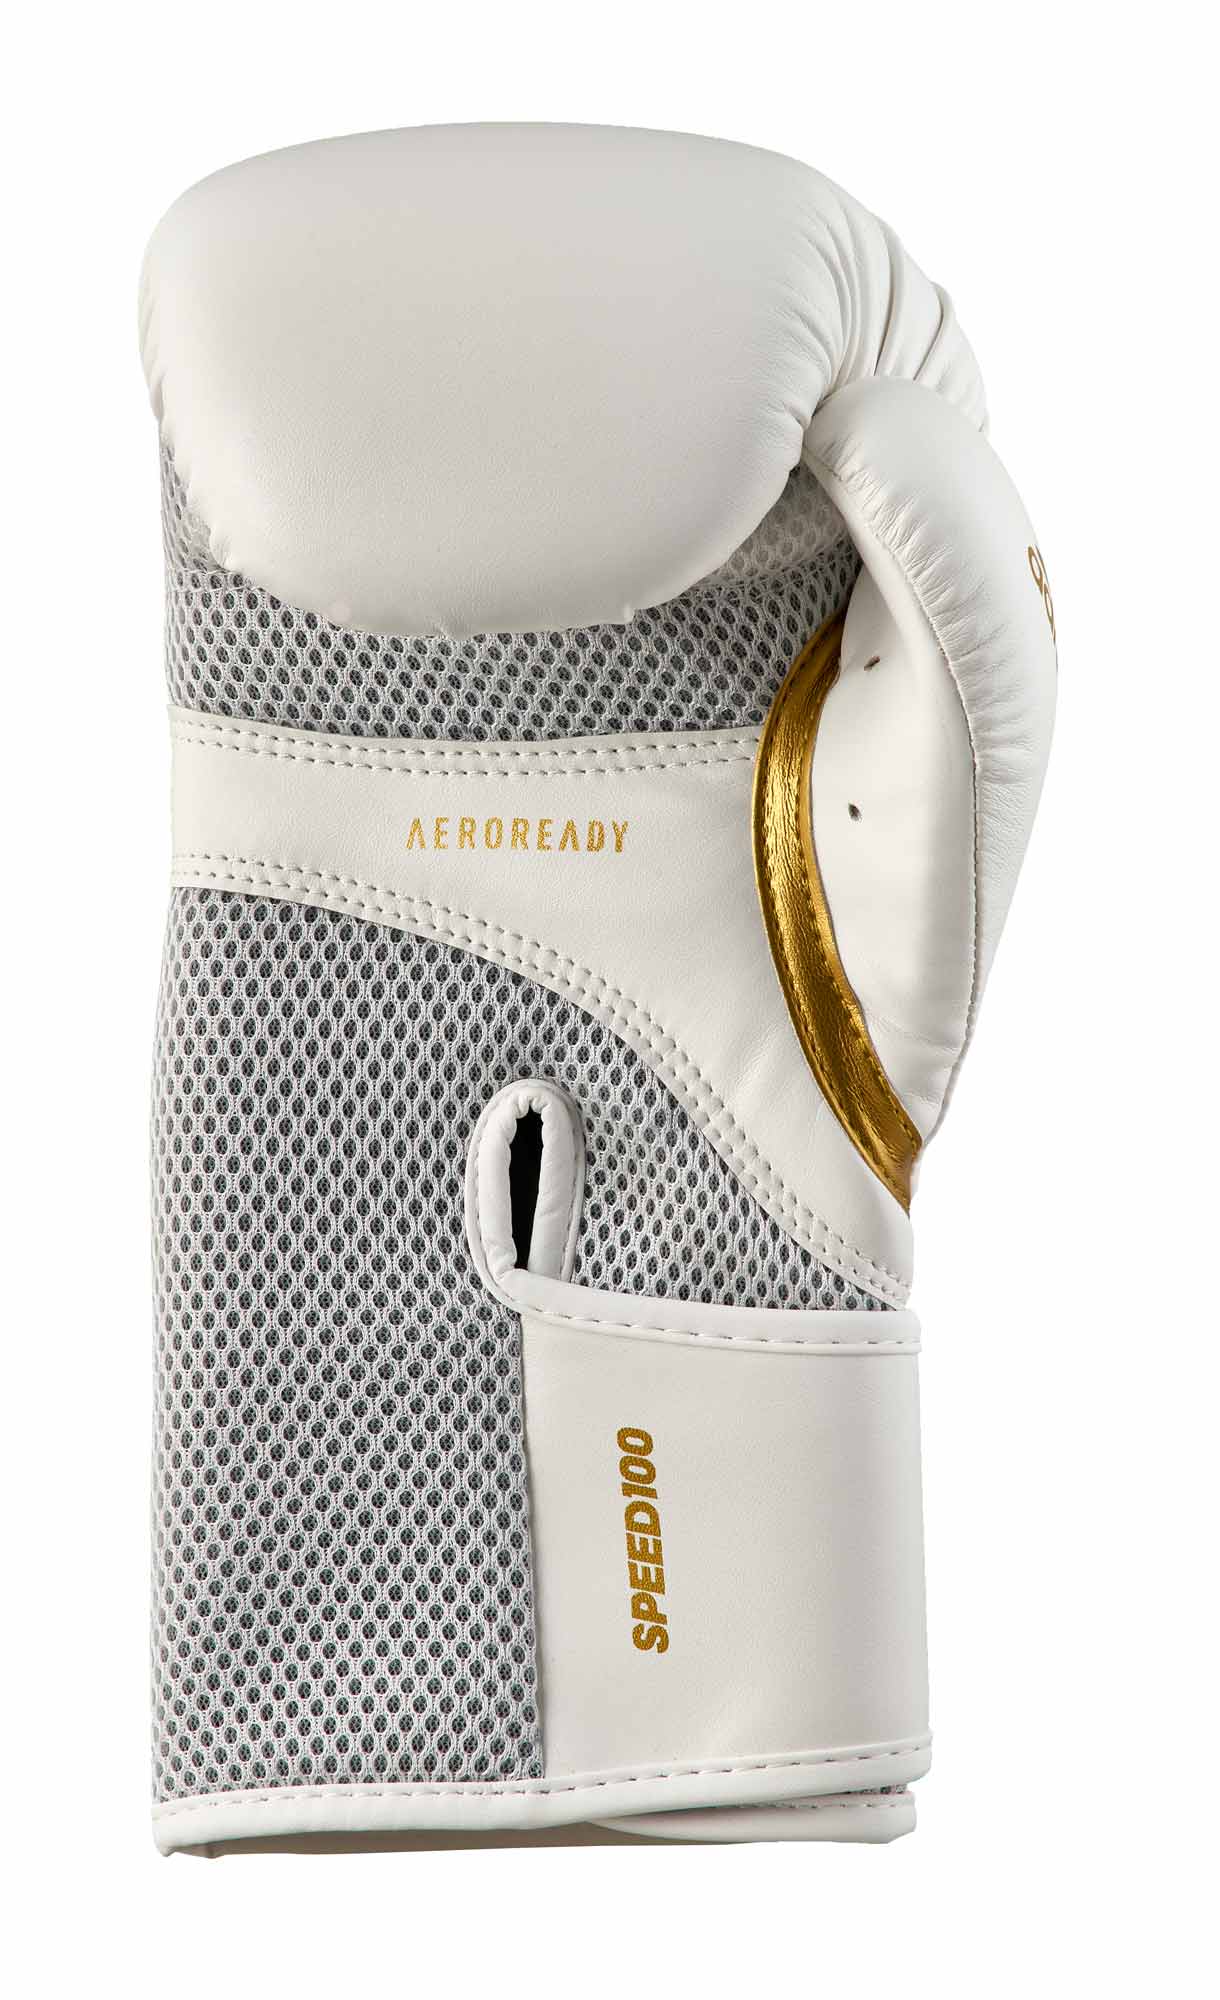 Adidas Speed 100 Boxing Gloves ADISBG100, Superior Shock Absorption